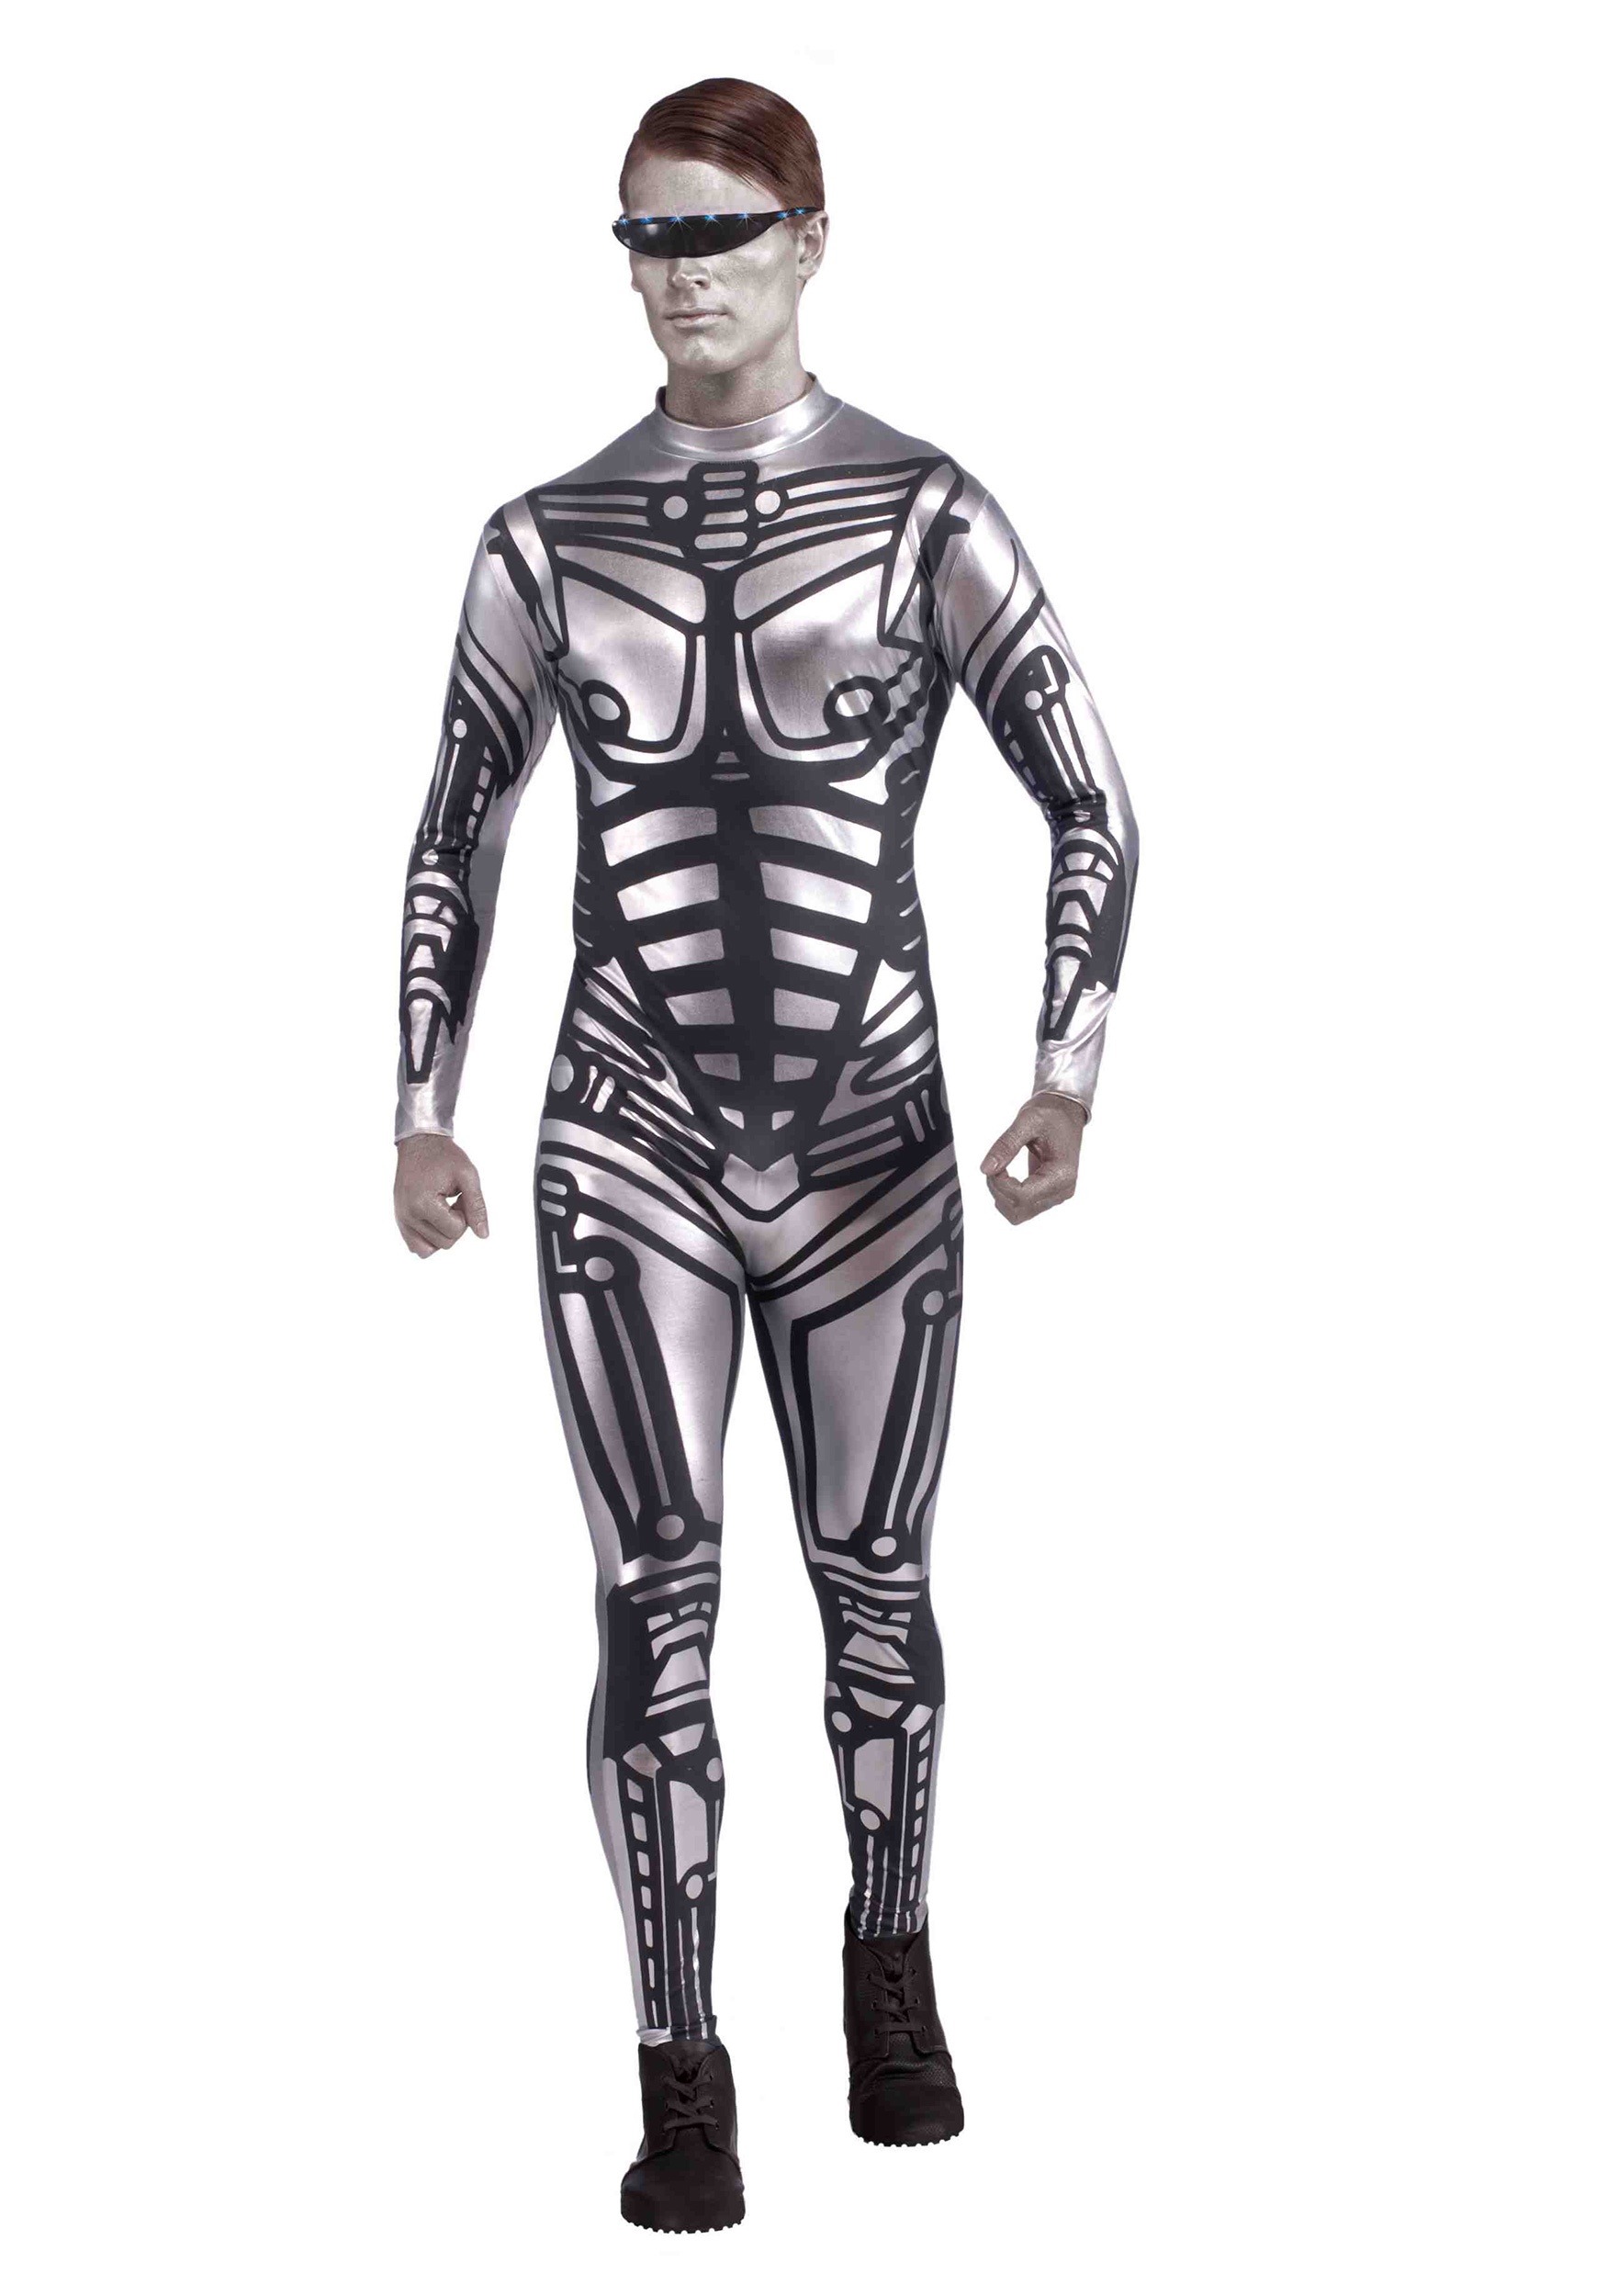 Robot Jumpsuit Costume for Men